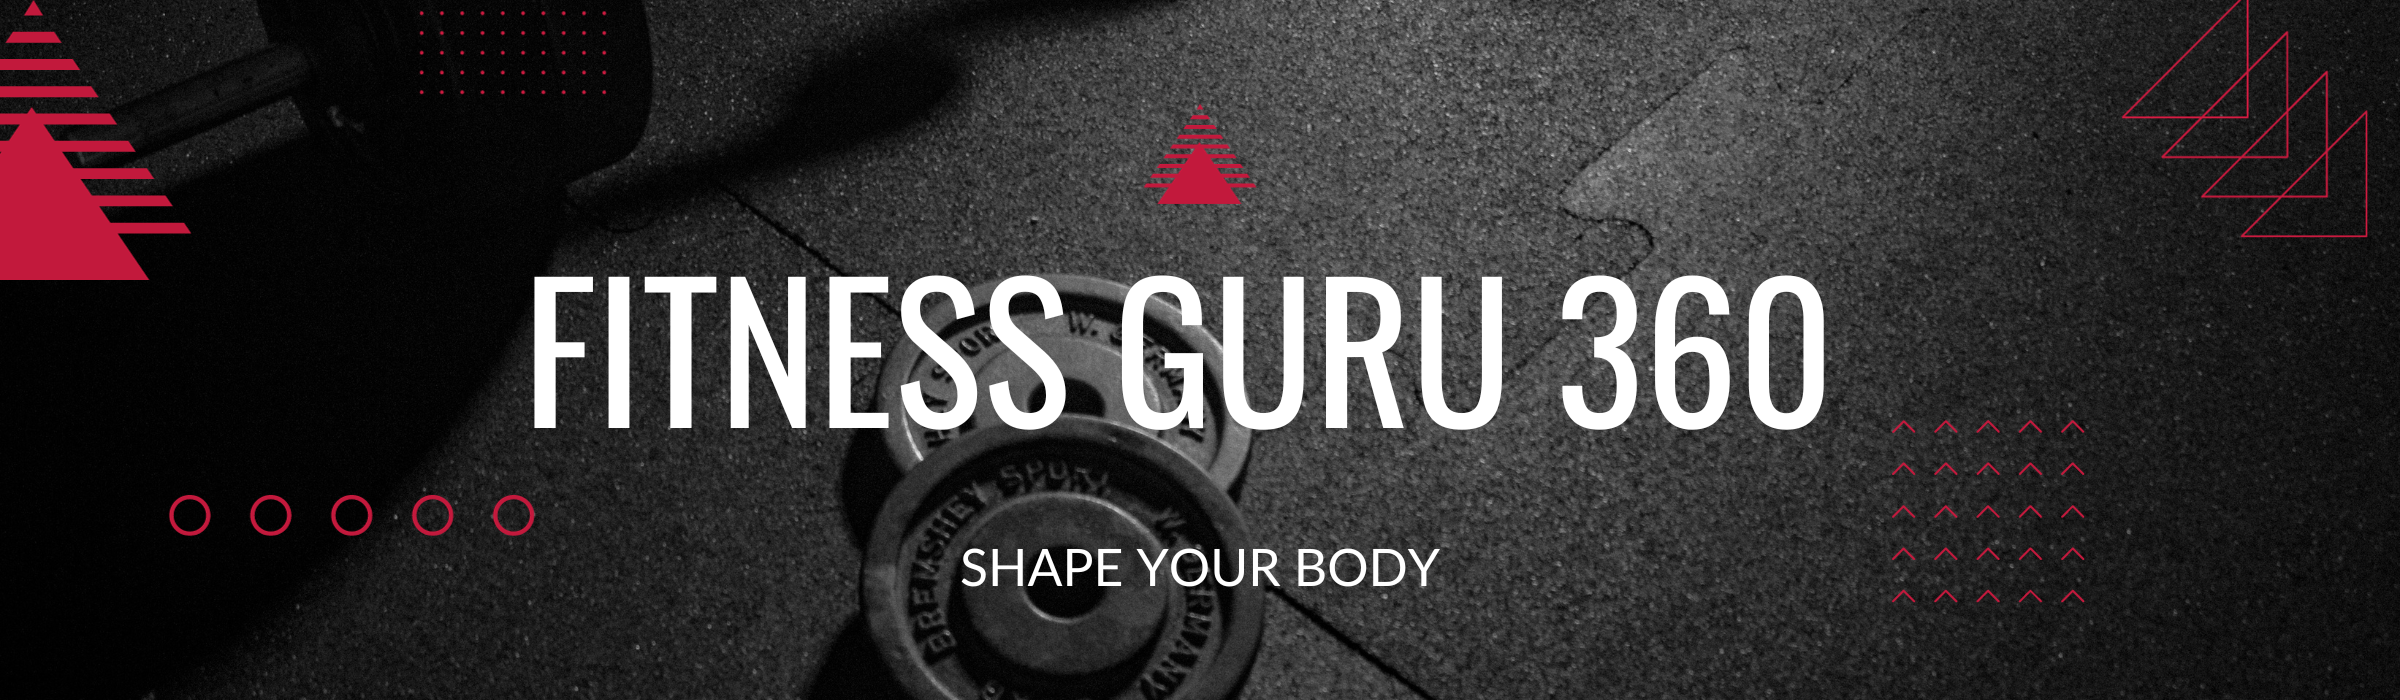 Fitness guru 360 (11)